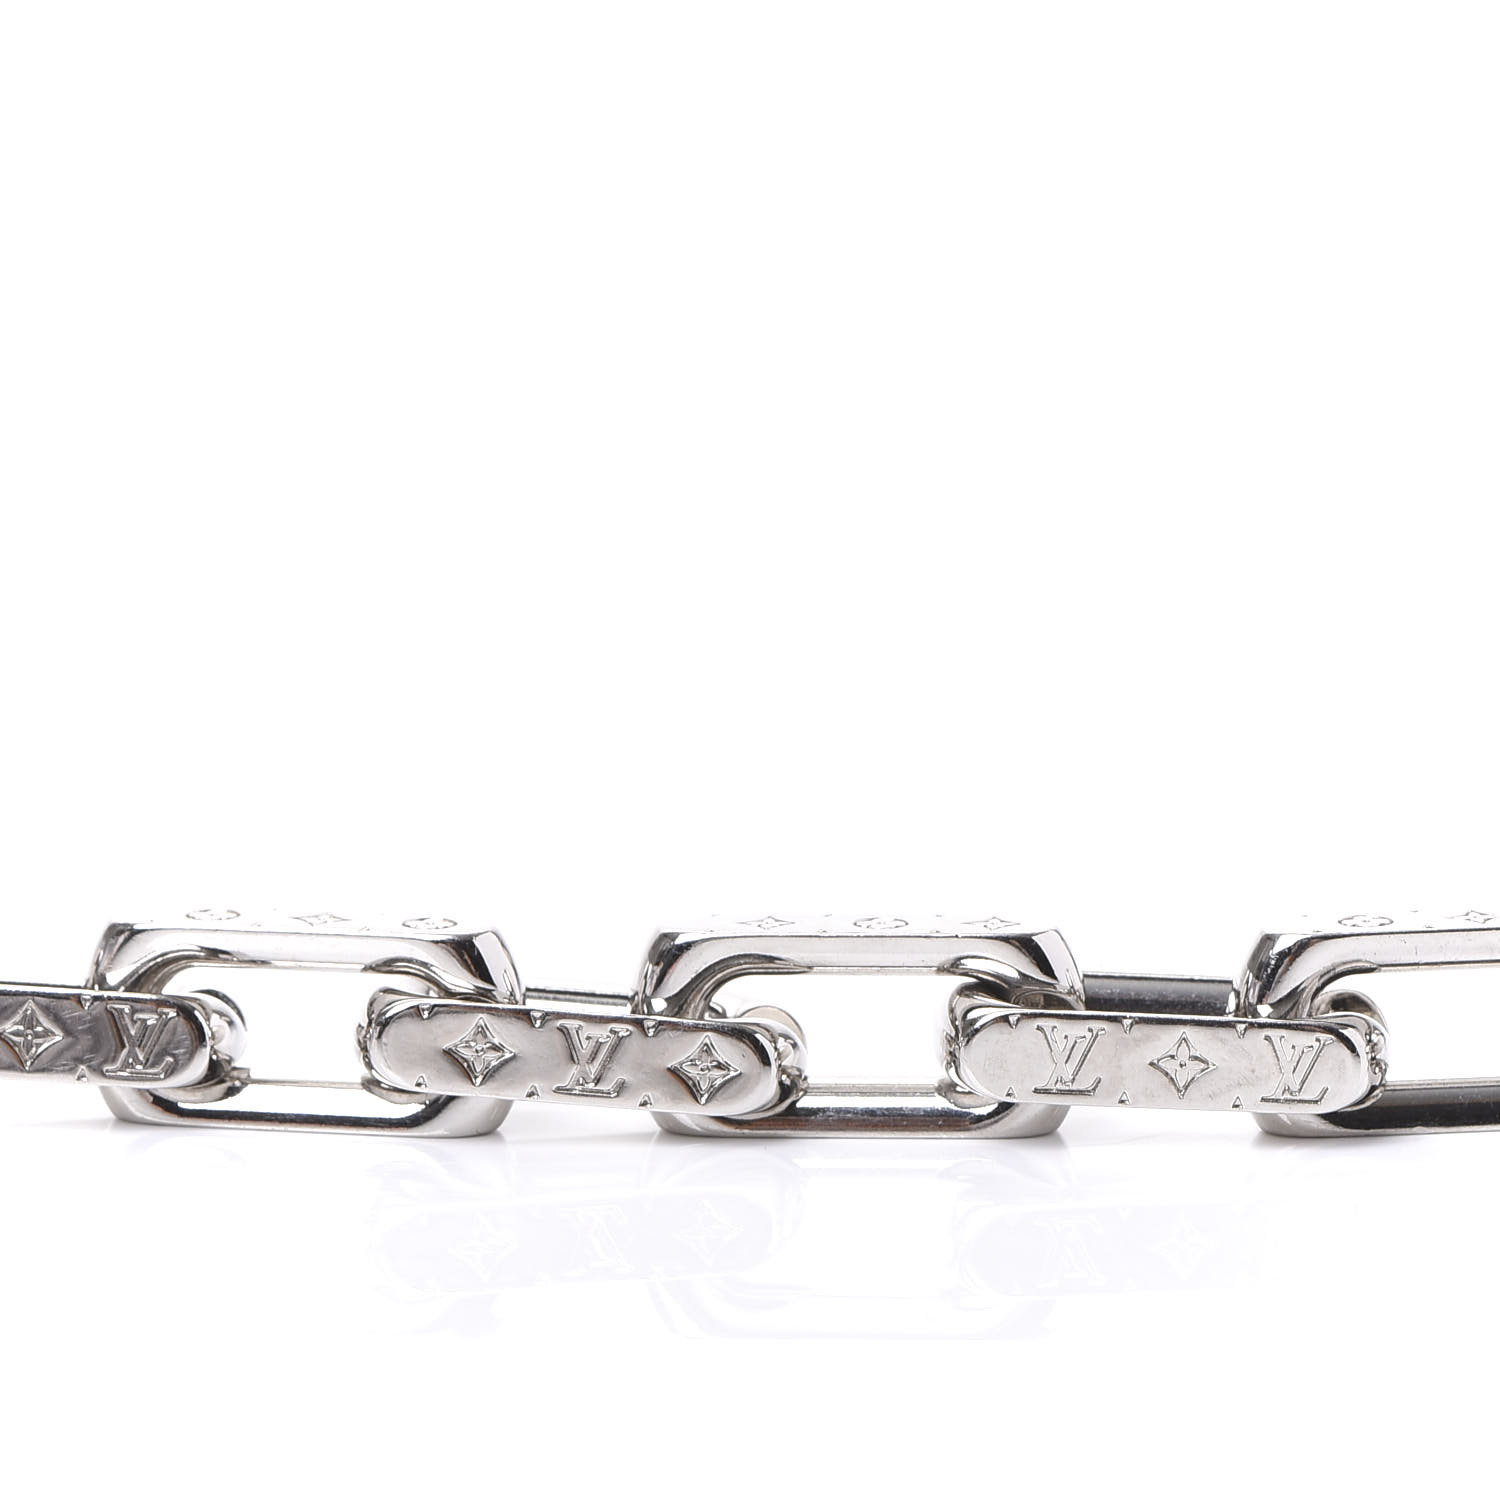 Louis Vuitton Monogram Chain Bracelet Silver Metal. Size L